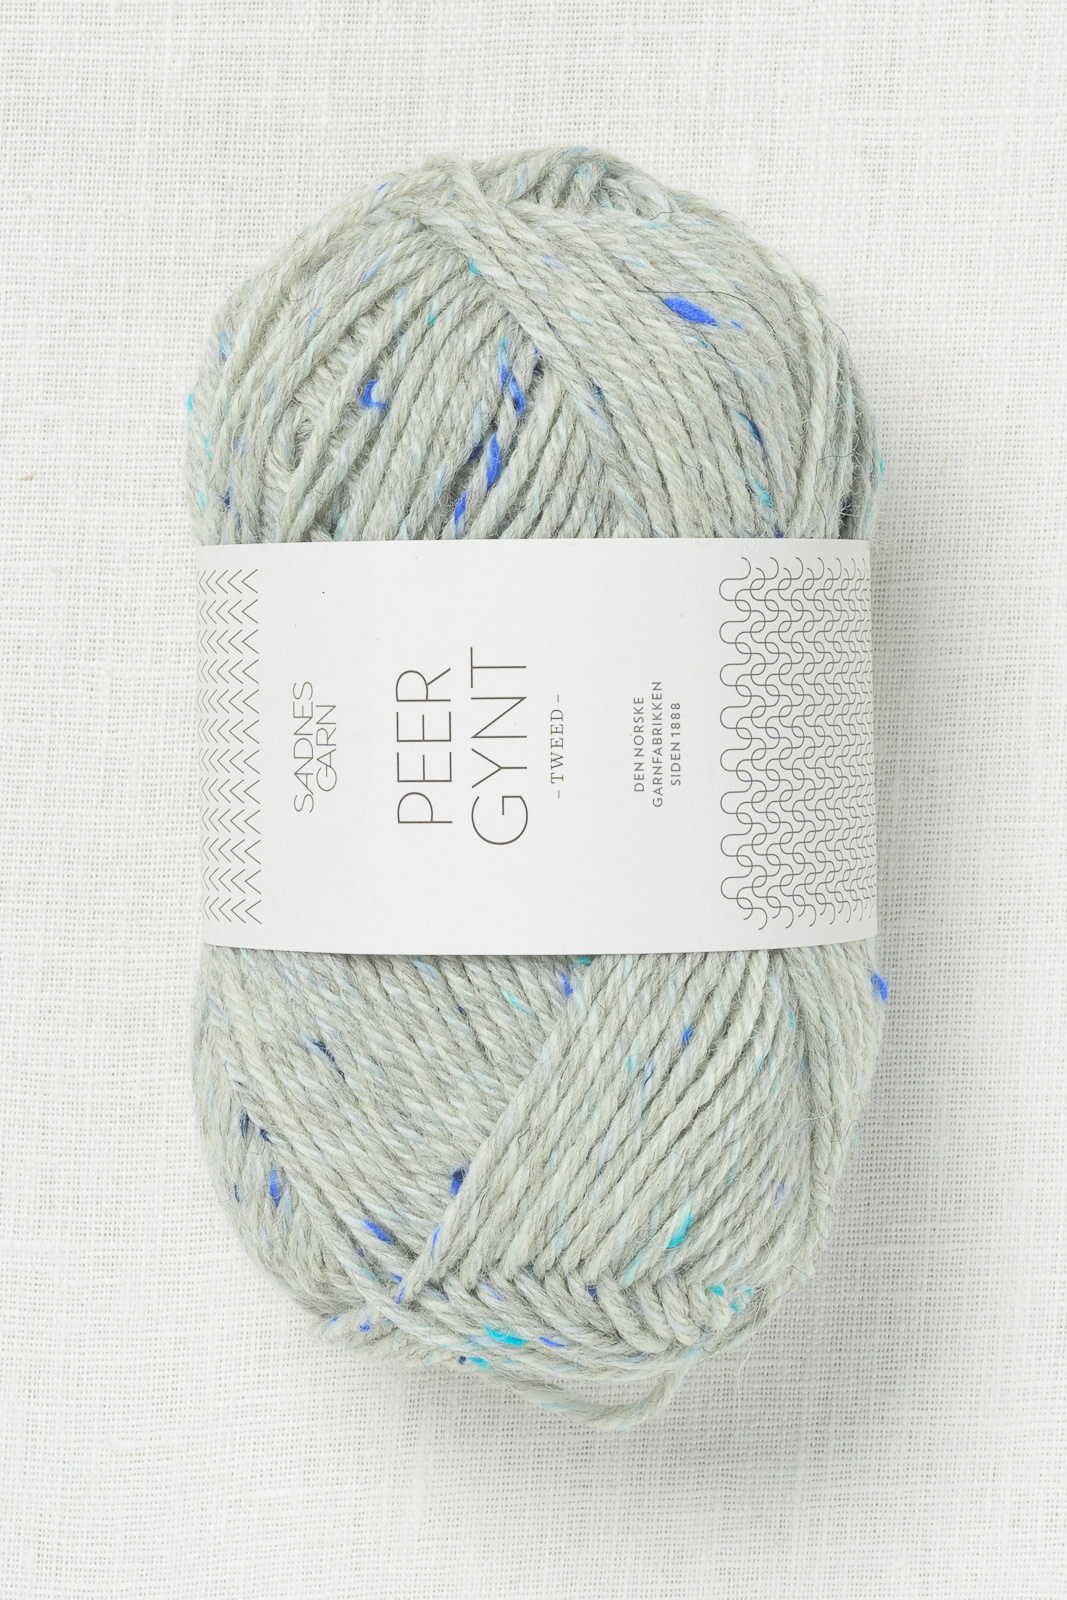 Sandnes Garn Peer Gynt 1502 Light Heather Blue Tweed - Wool and Company Yarn